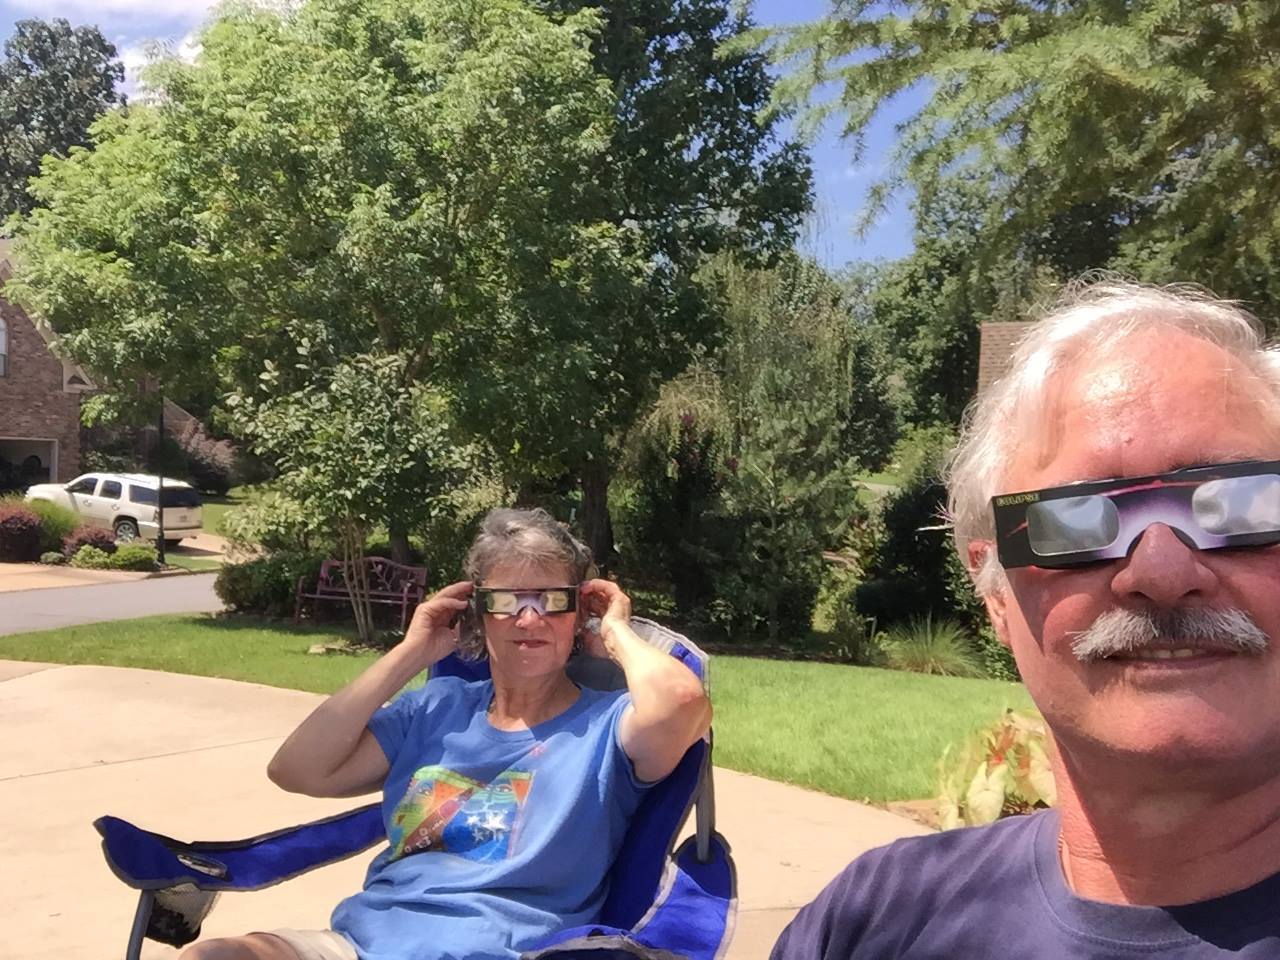 Dr. Bonsib and Christine Bonsib were watching the eclipse